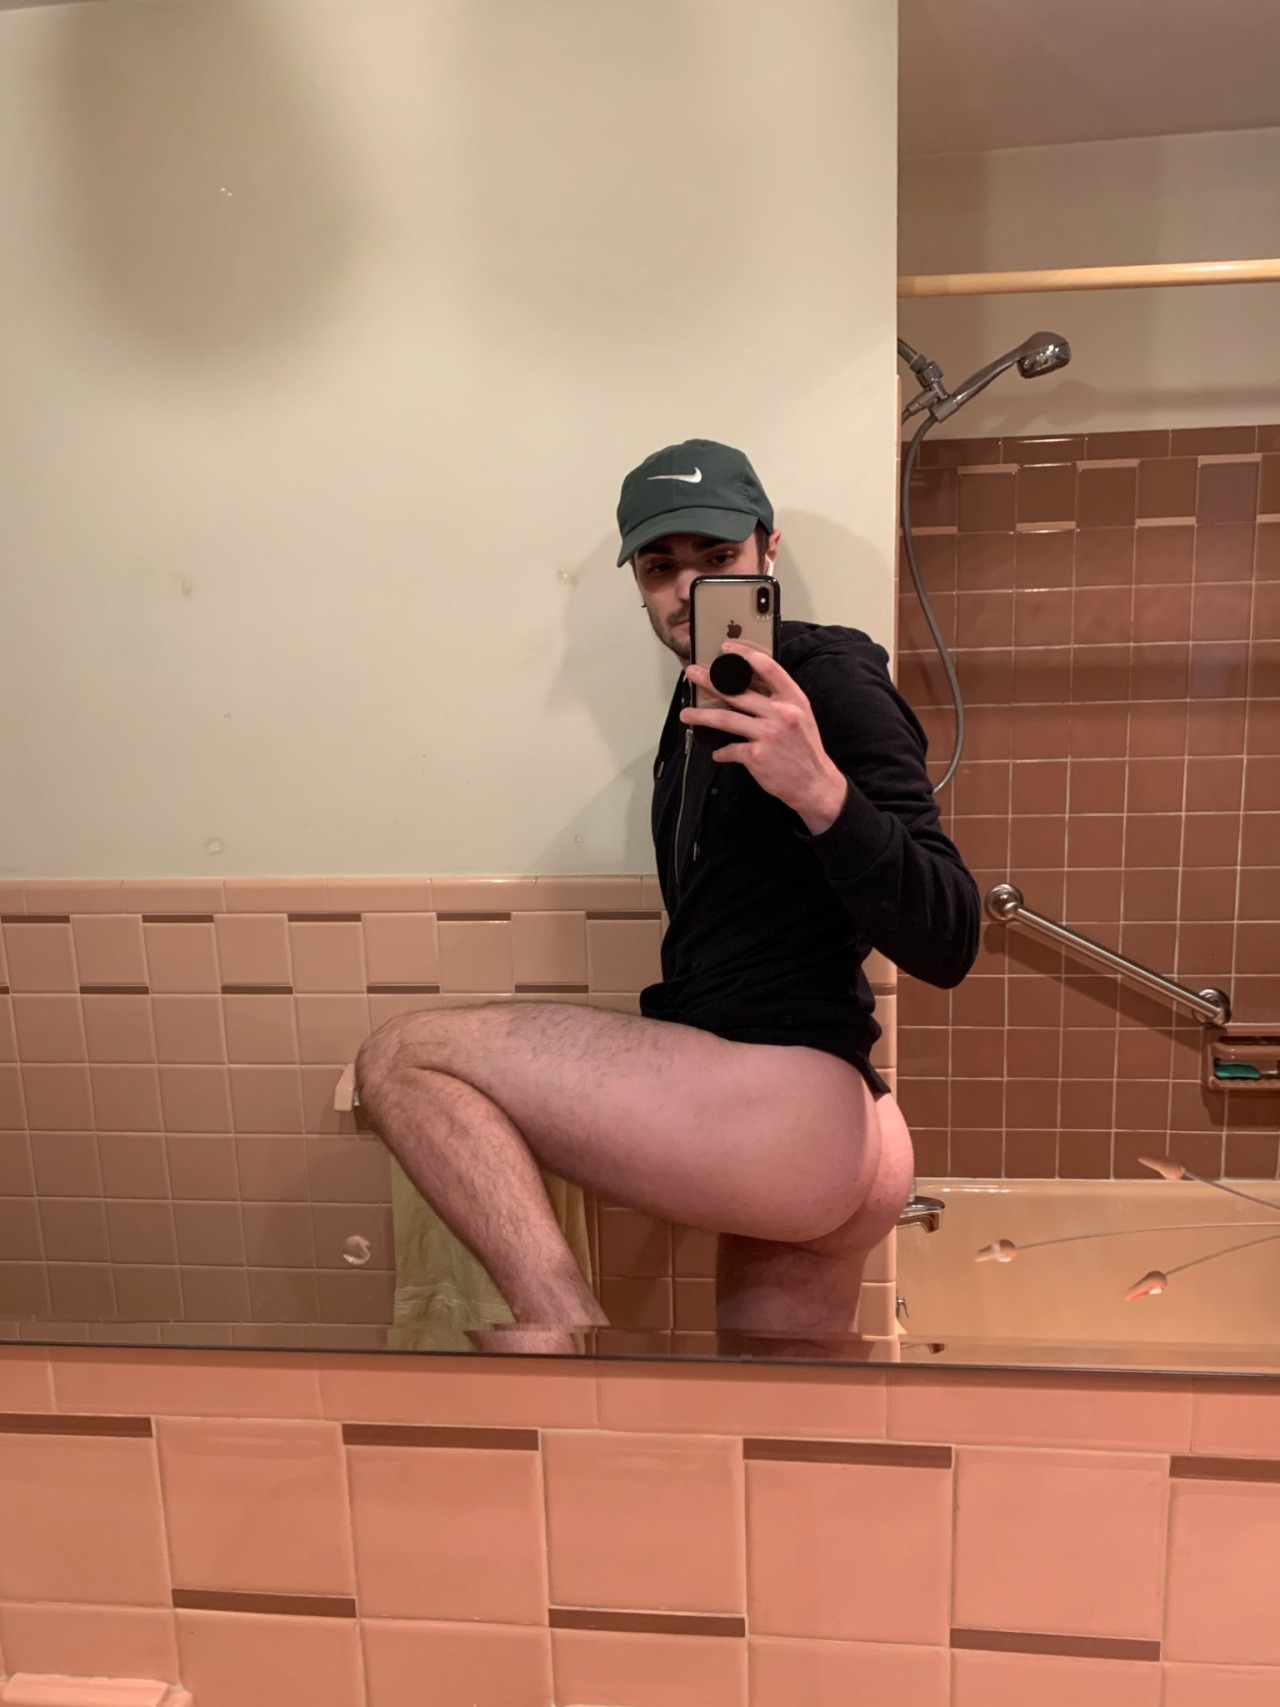 Porn jamison-whiskey:I did a leg day photos